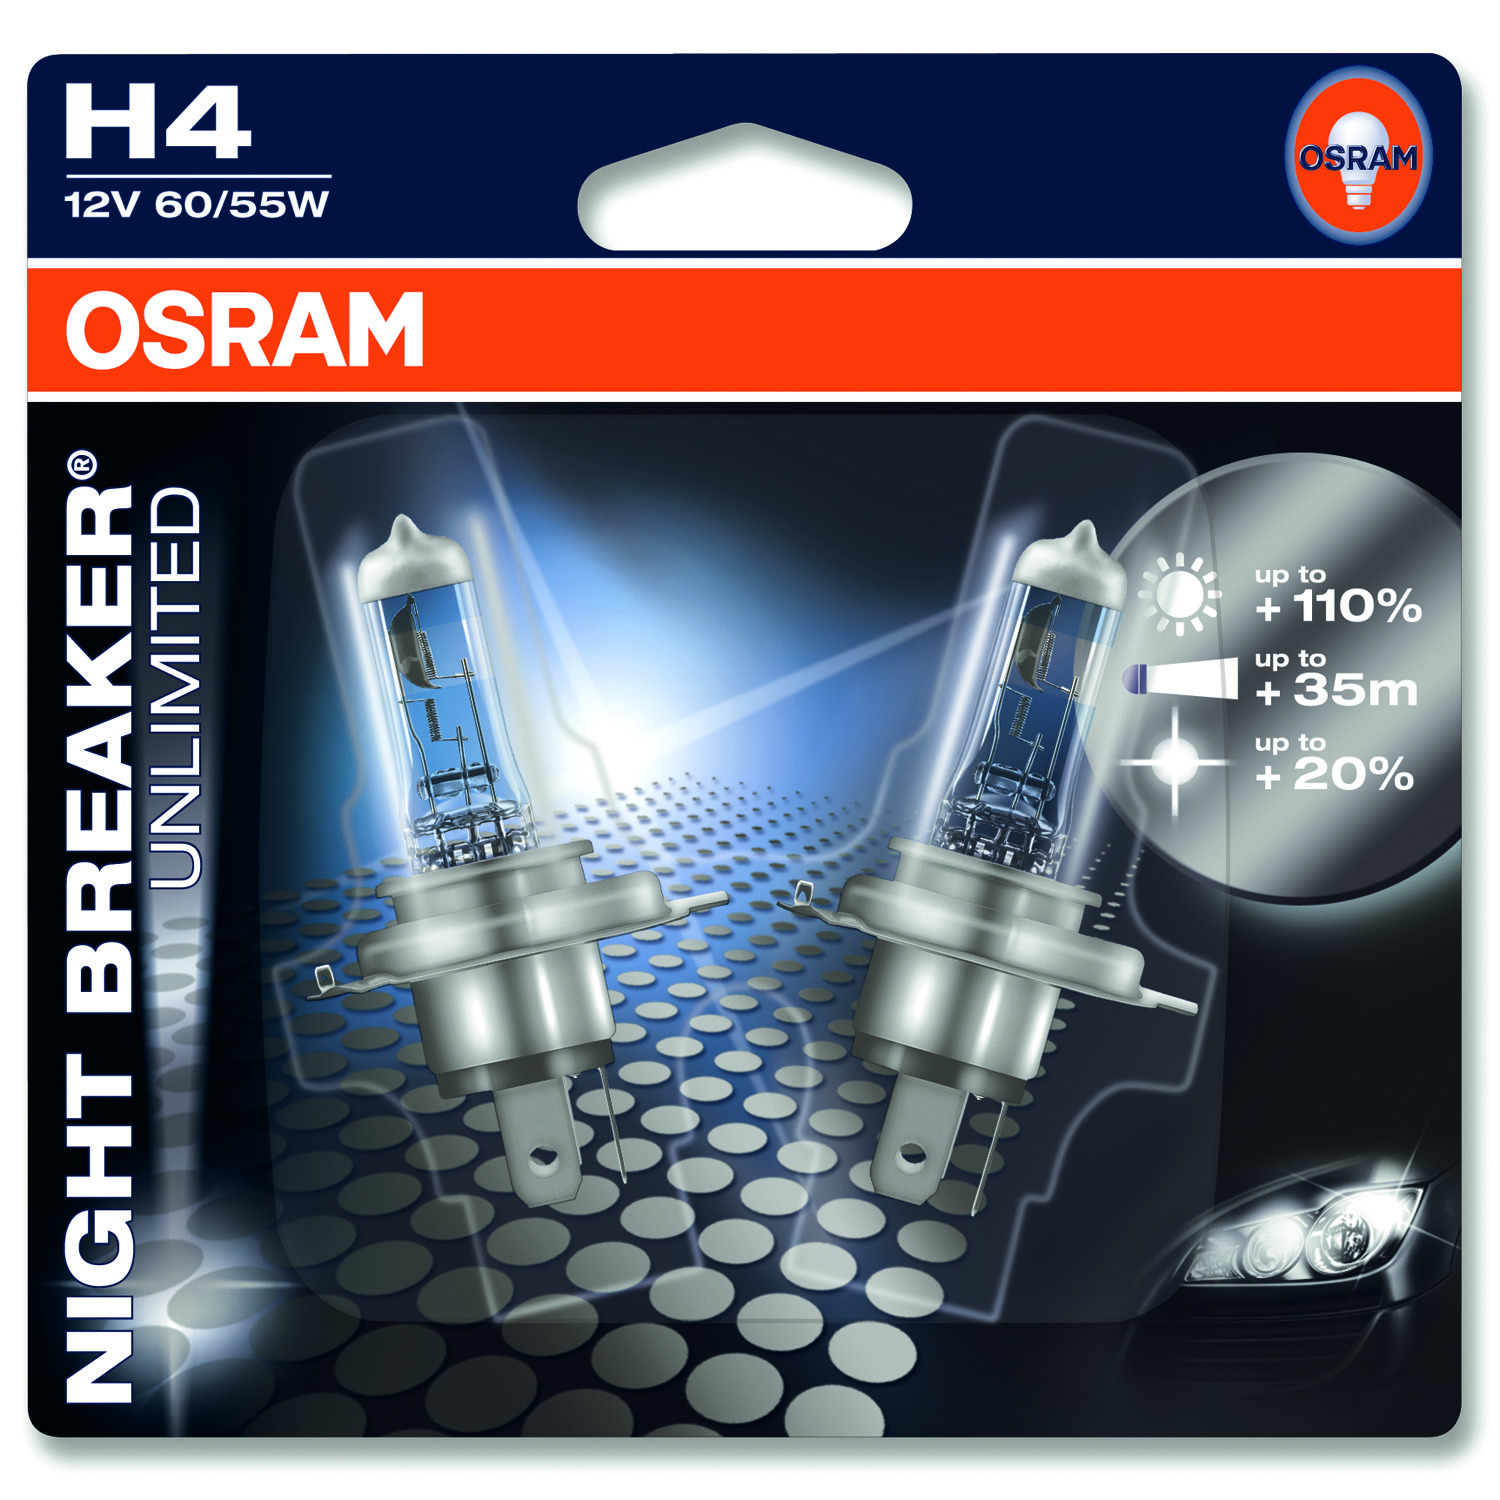 Osram H4 bulbs offer up to 130% more light